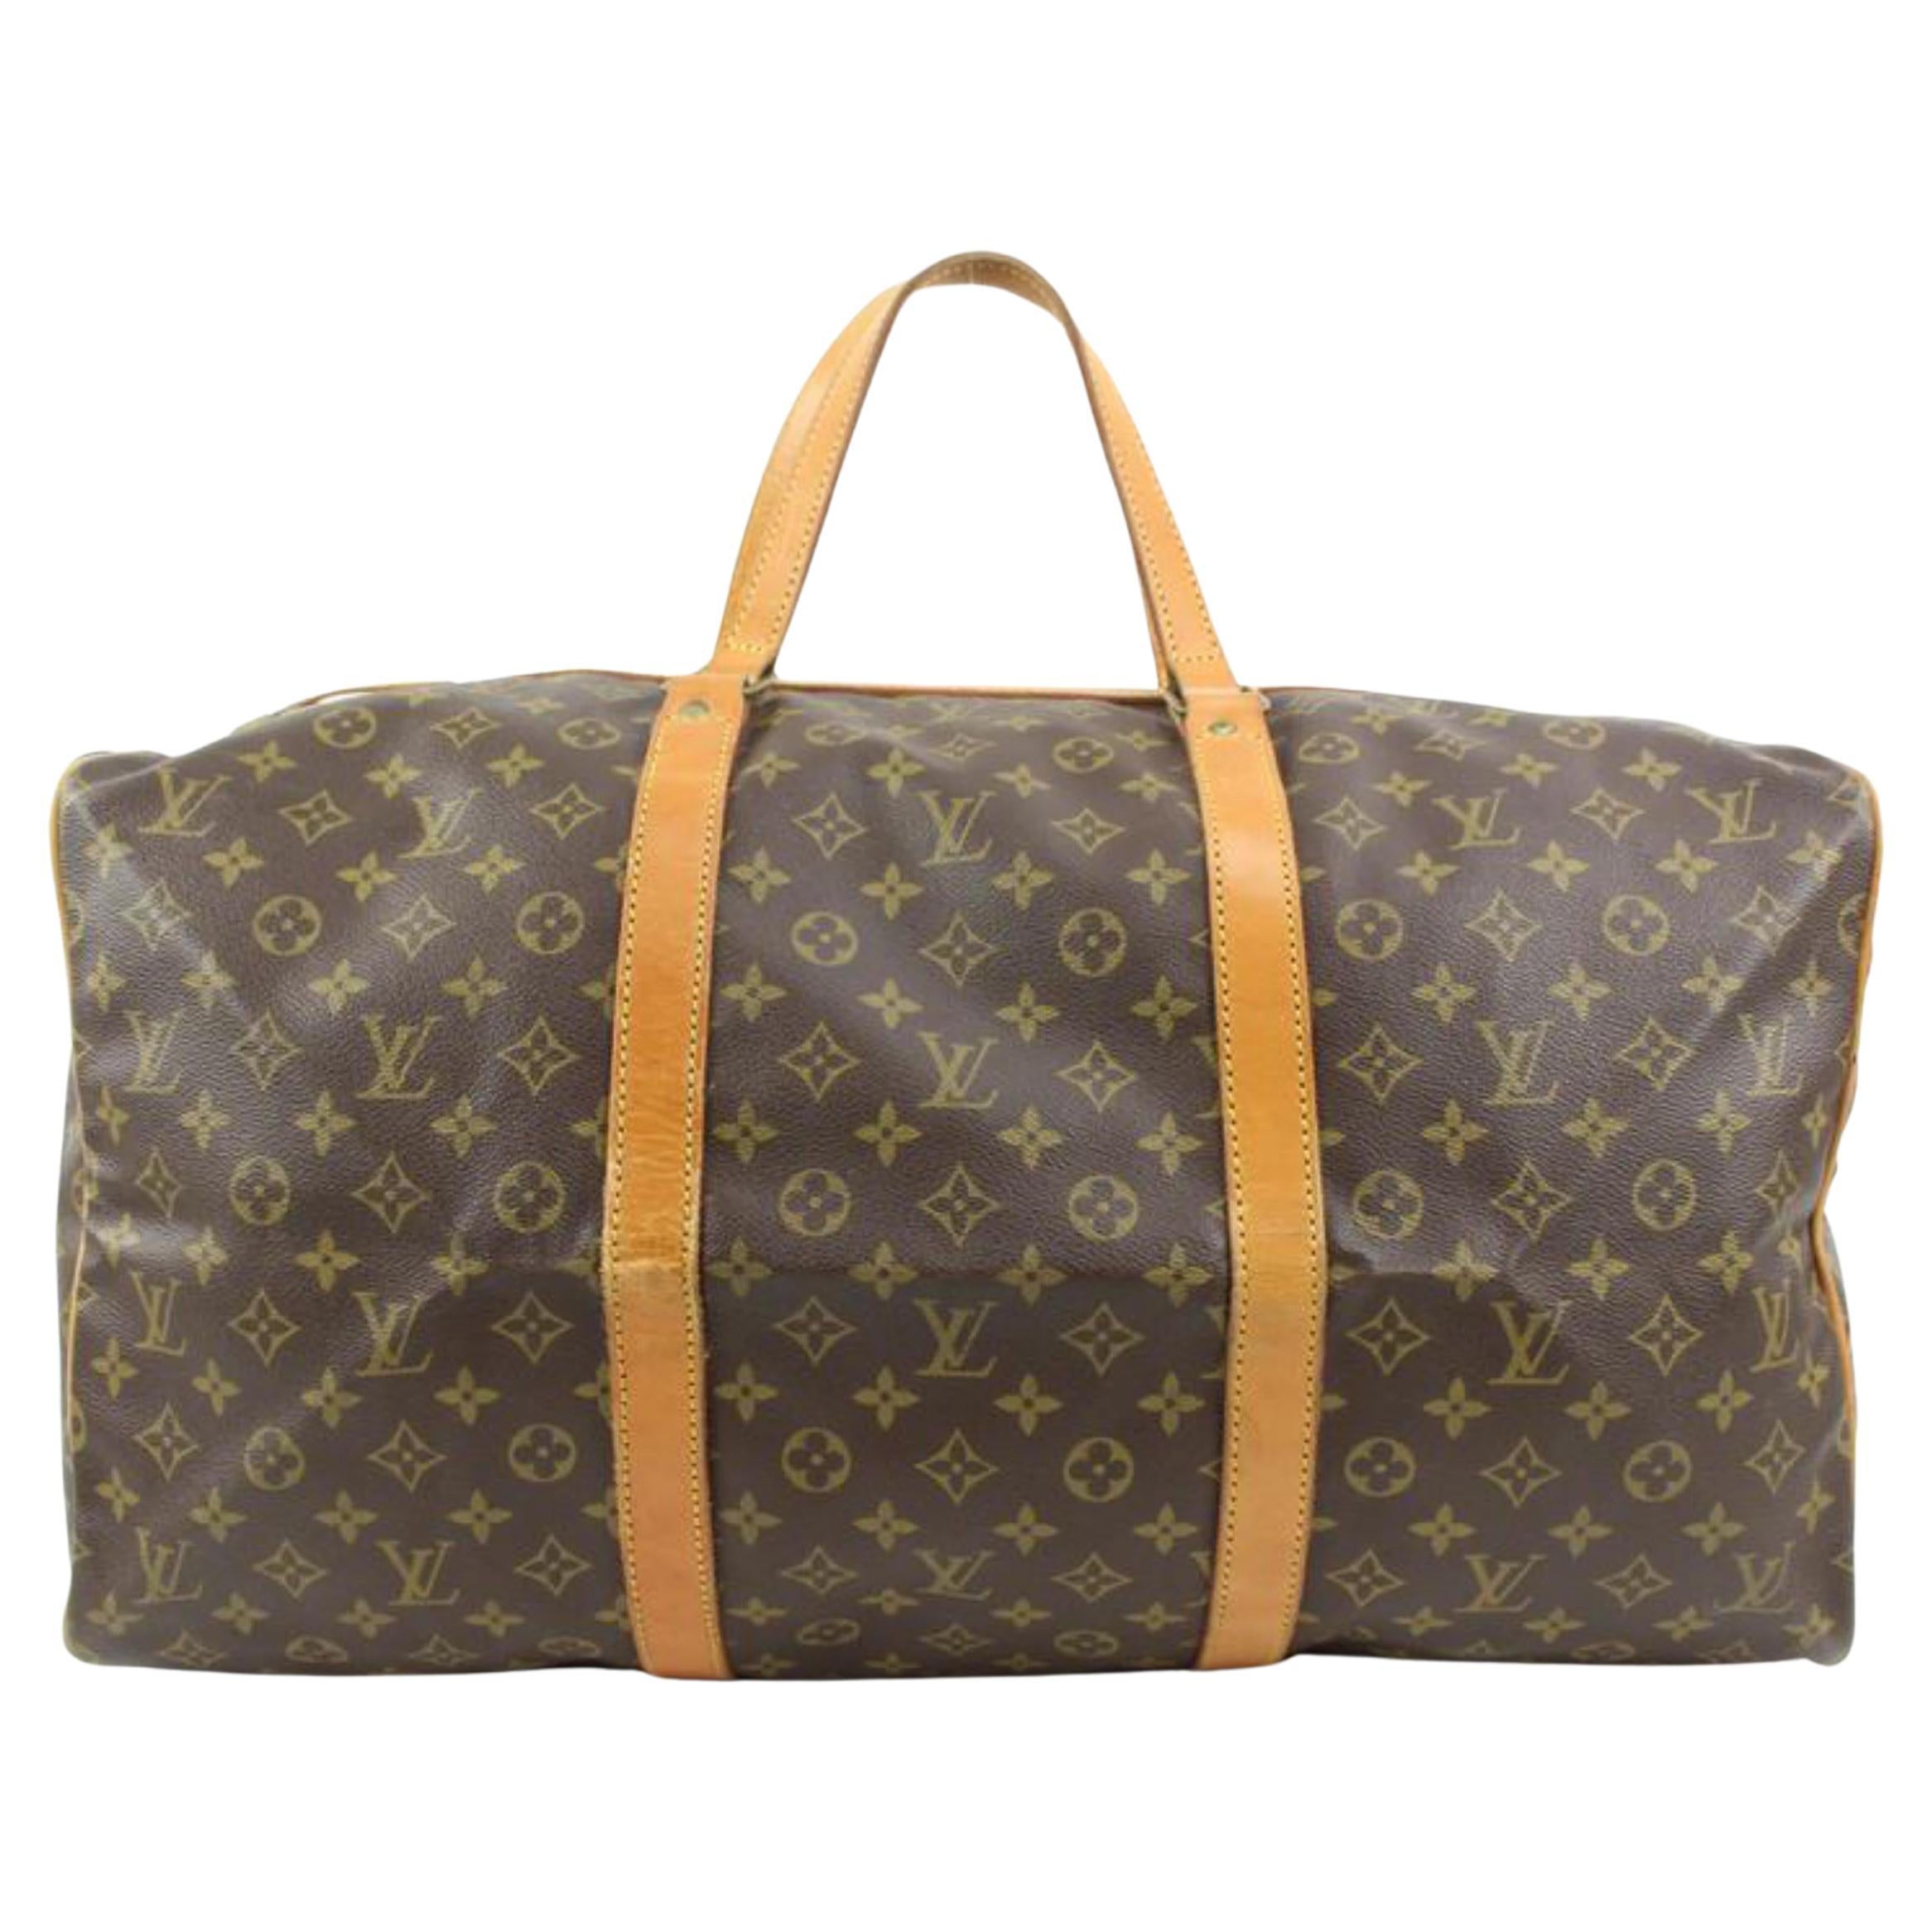 Louis Vuitton Discontinued Monogram Sac Souple 55 Duffle Bag 24lk31s